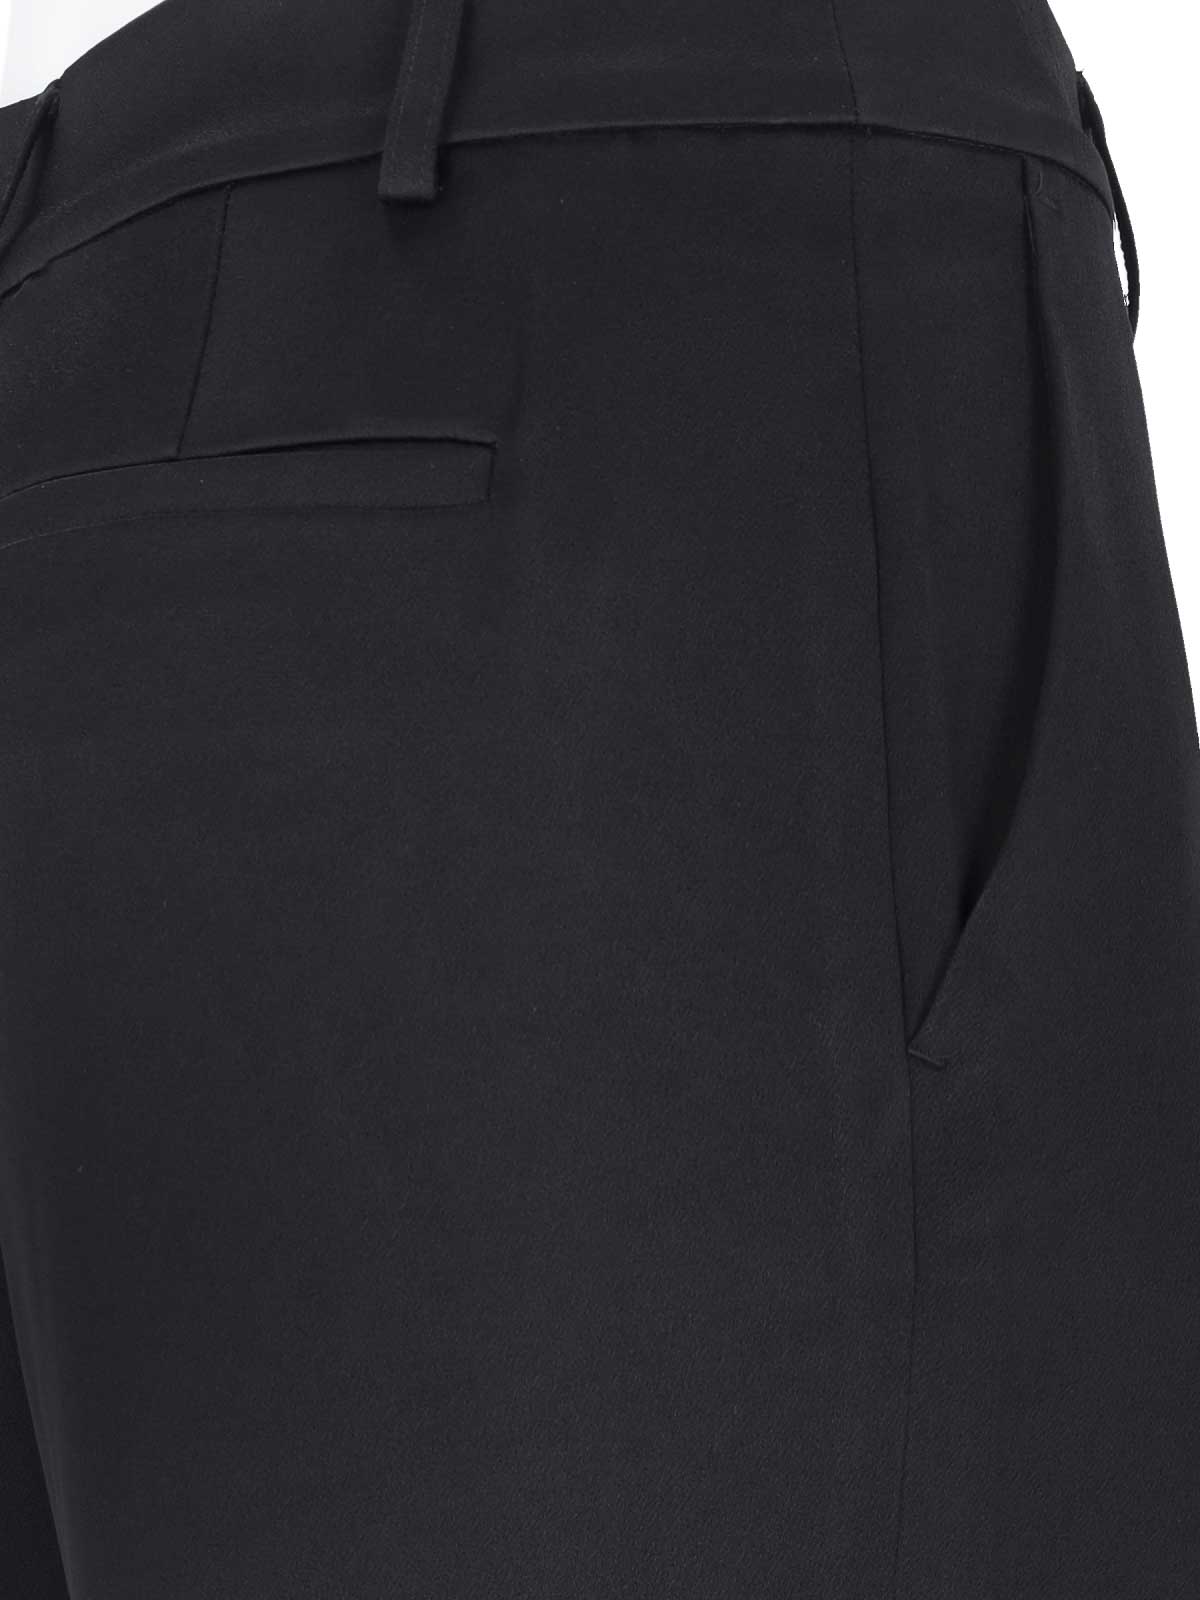 Shop Michael Kors Paneled Trousers In Black